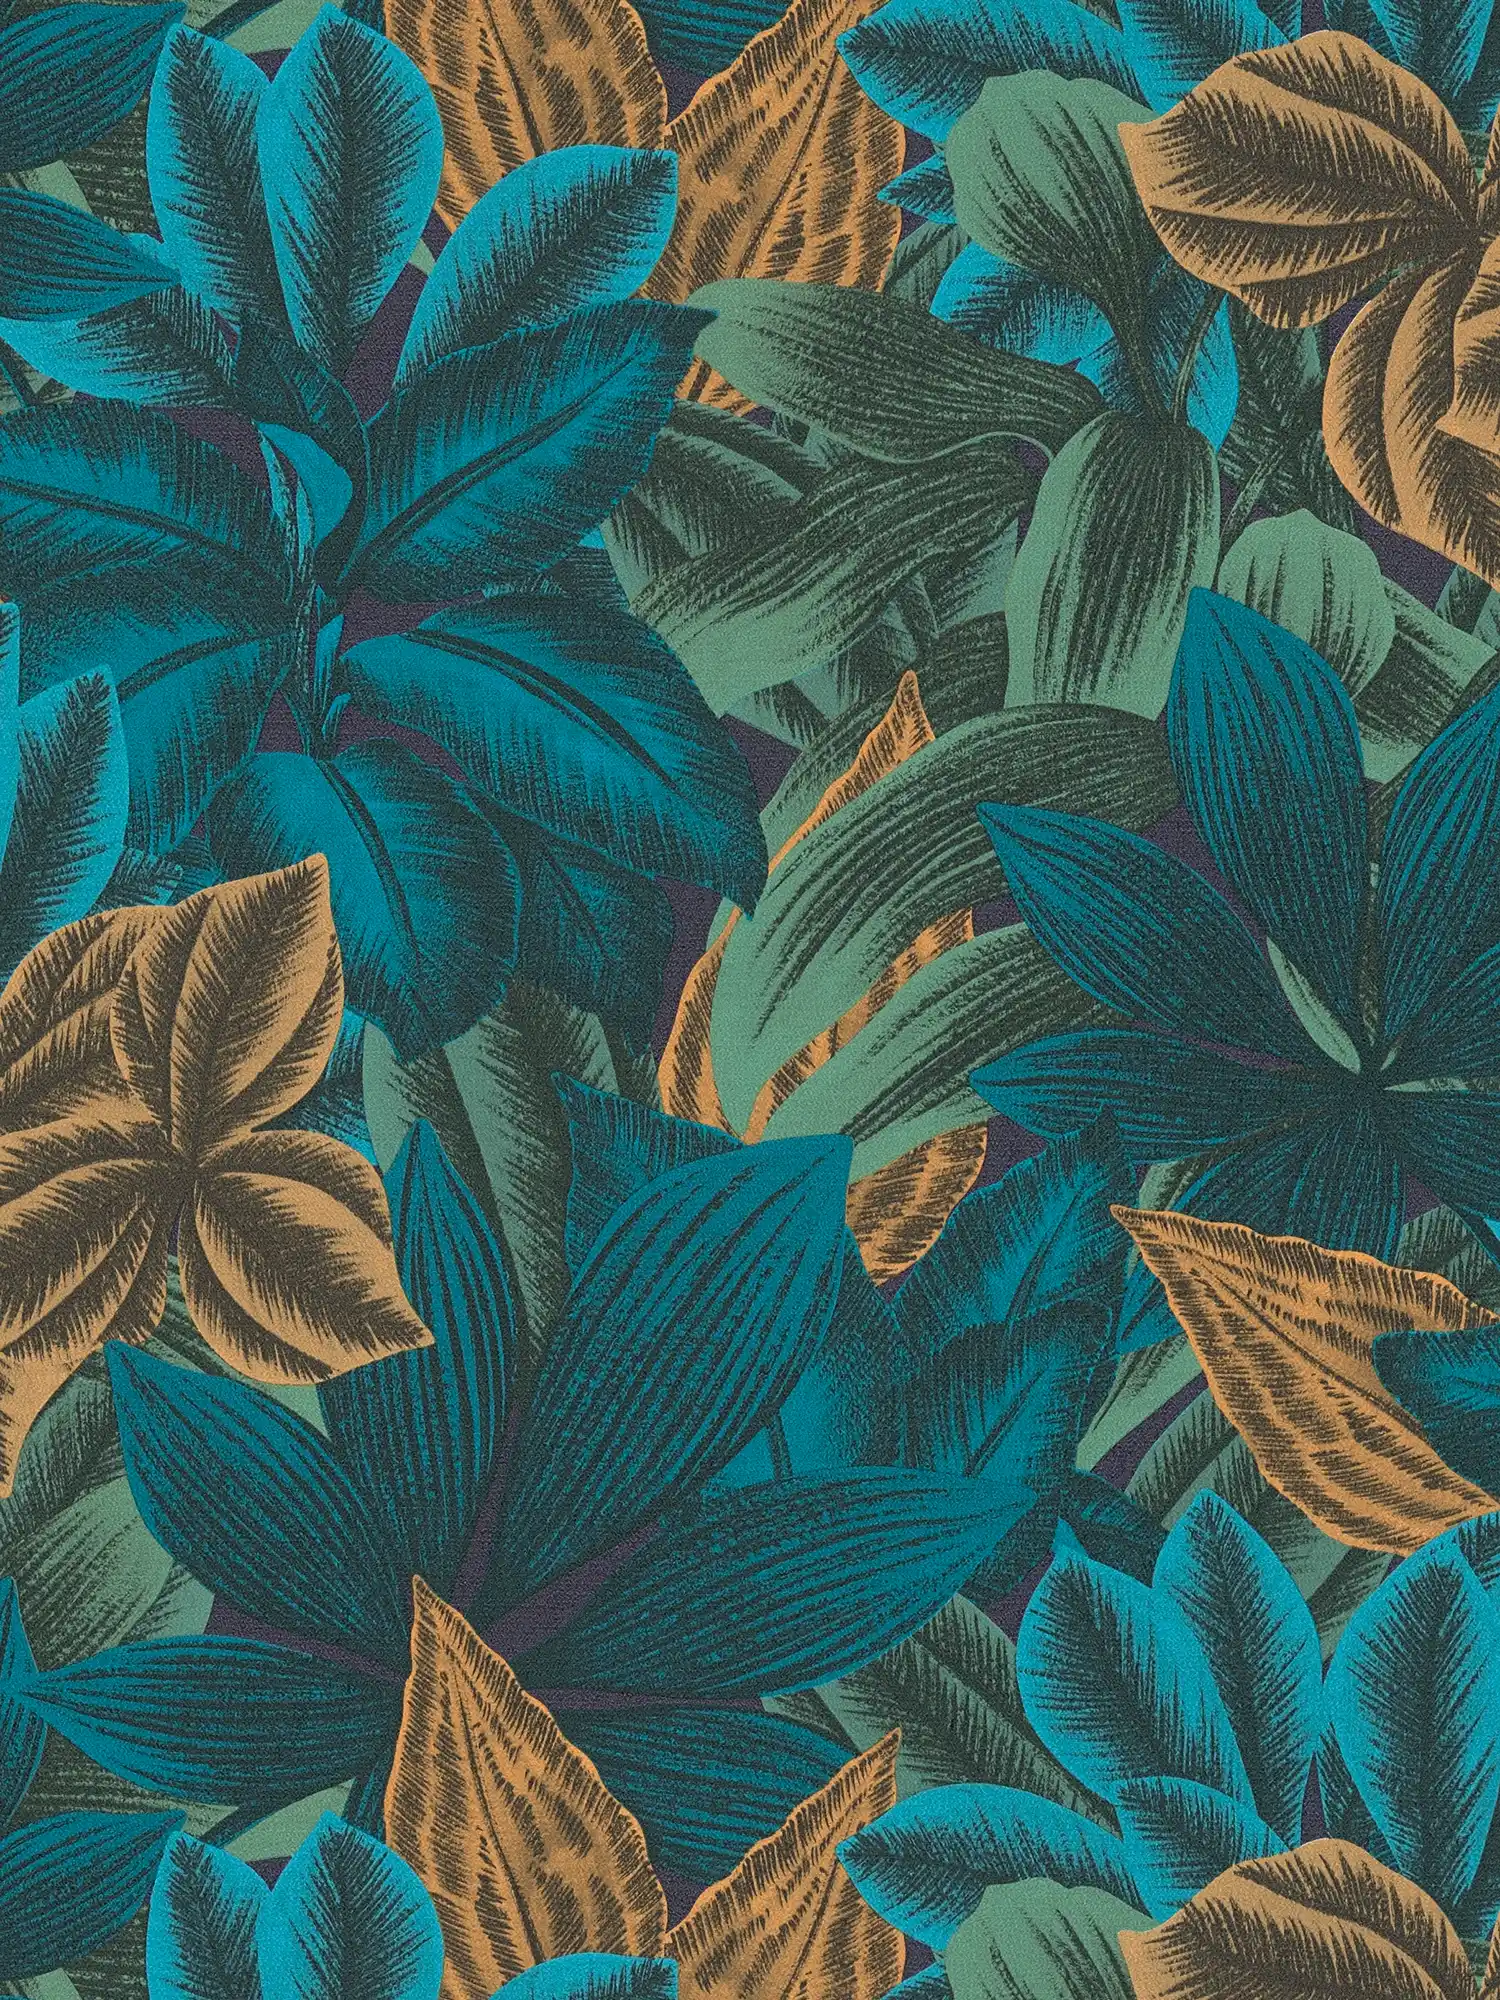 Papel pintado tejido-no tejido floral con motivo de hojas de selva - azul, naranja, morado
